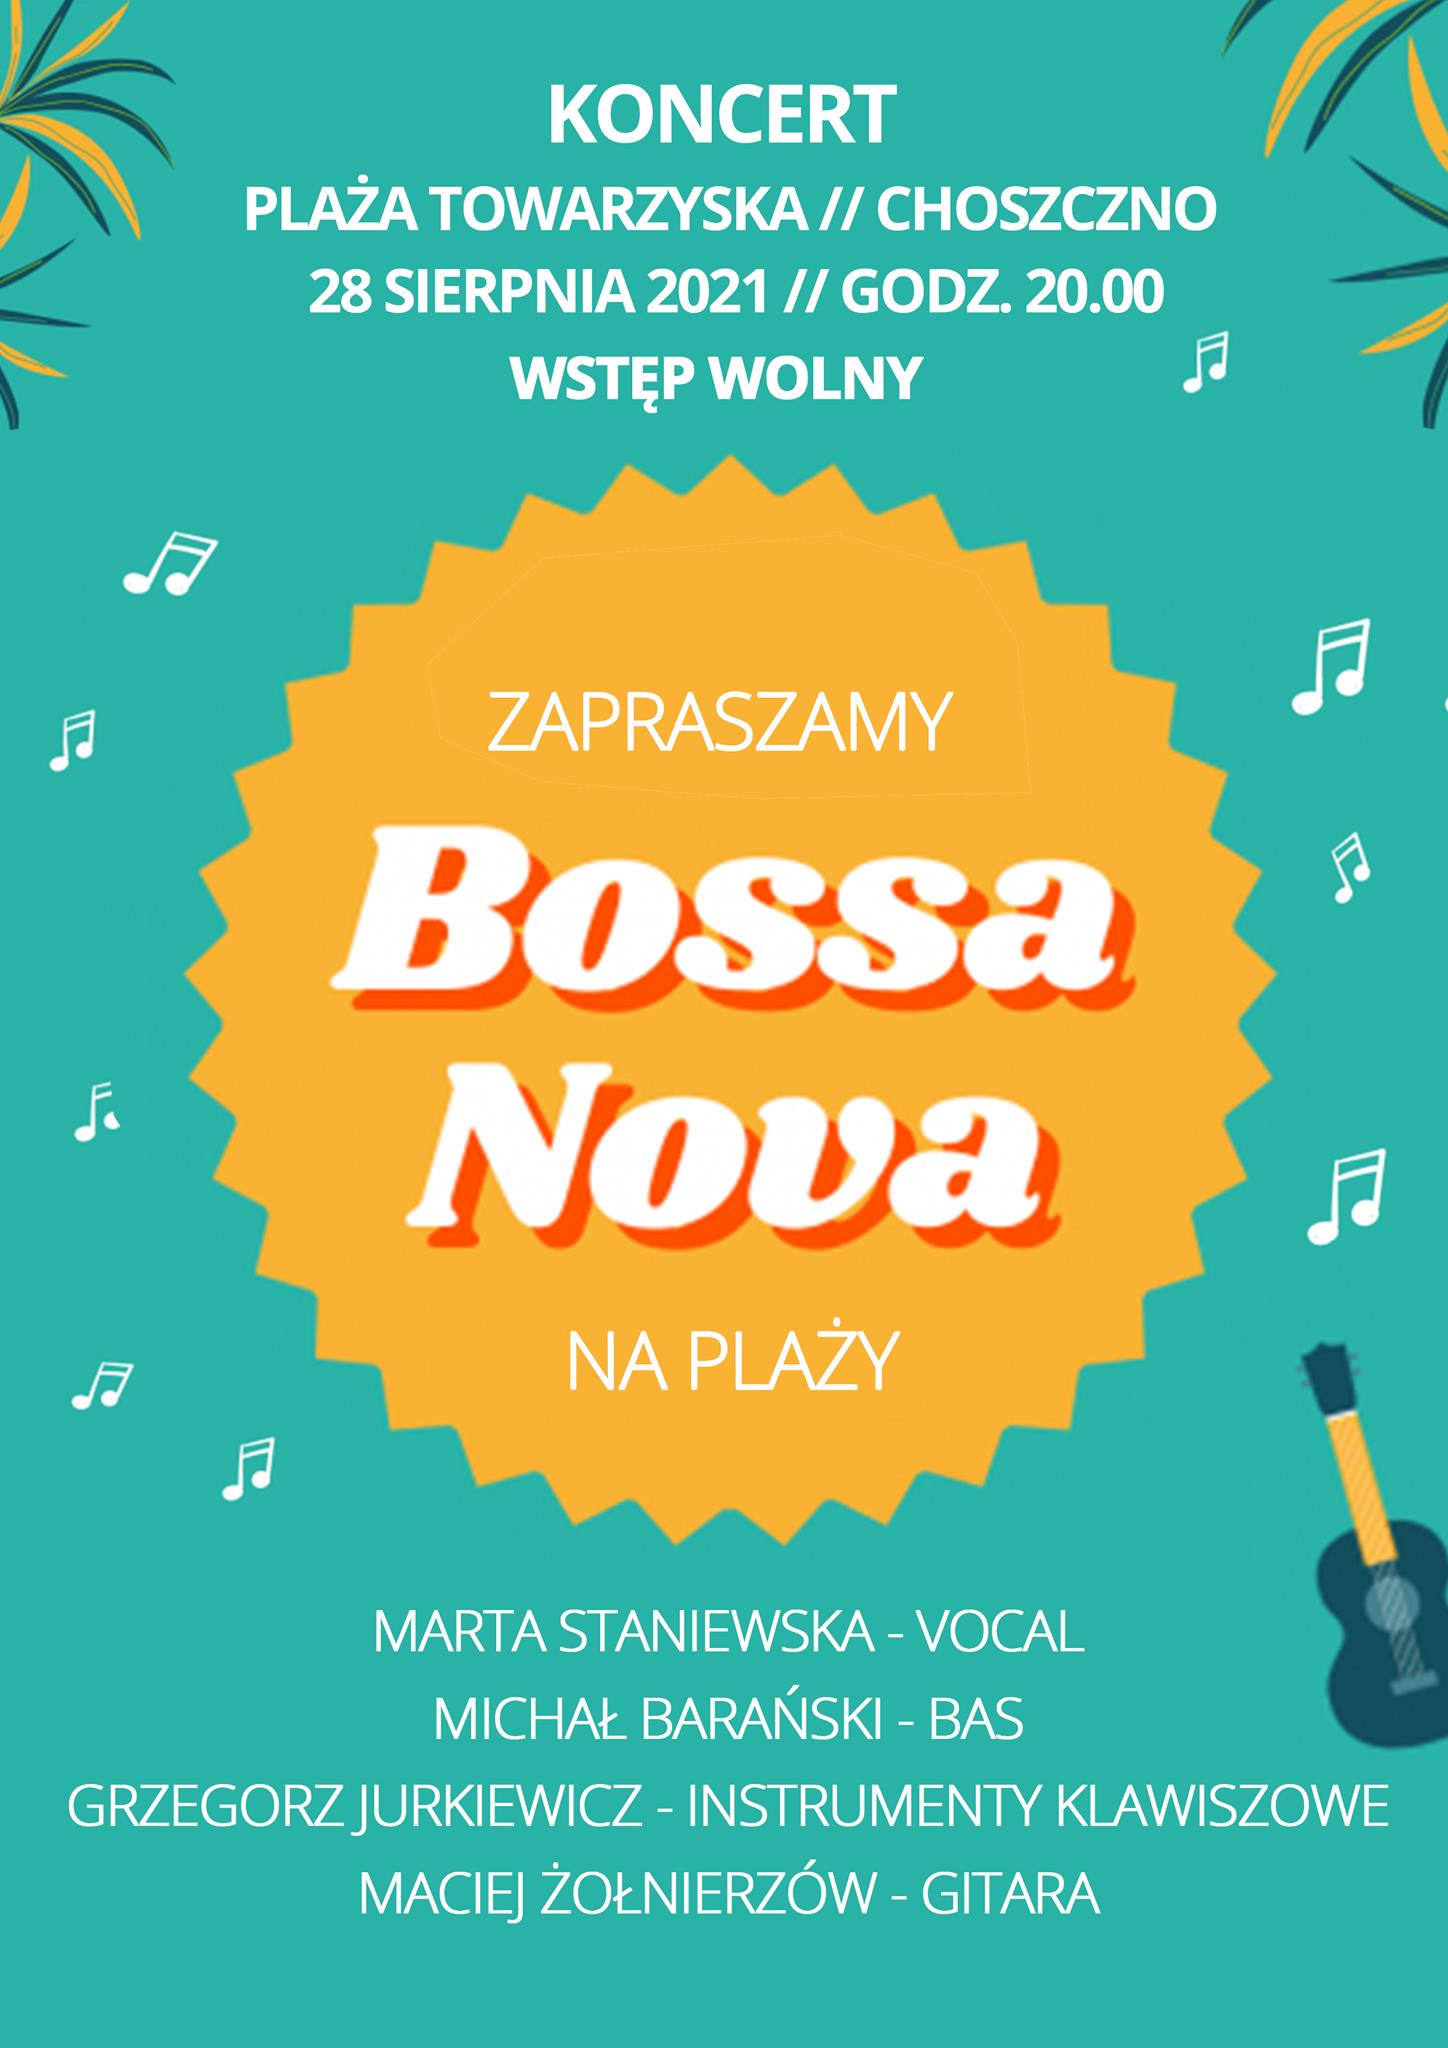 Koncert "Bossa Nova"